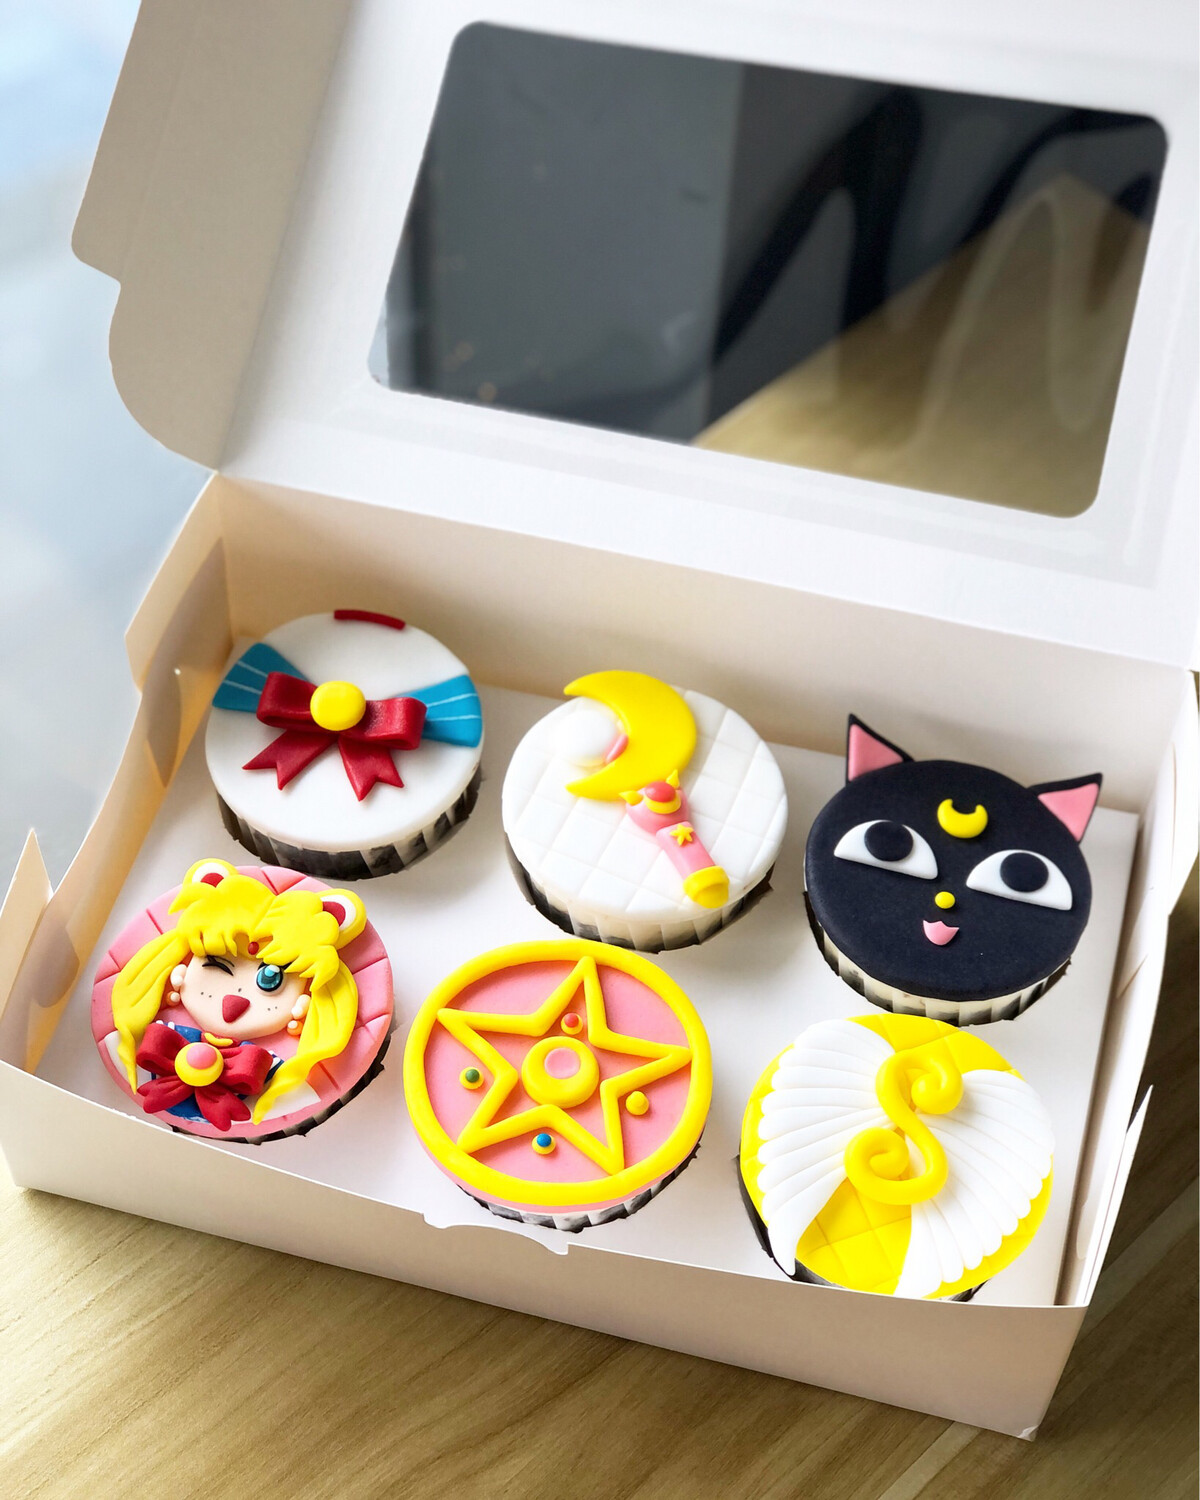 Sailor Moon Cupcakes